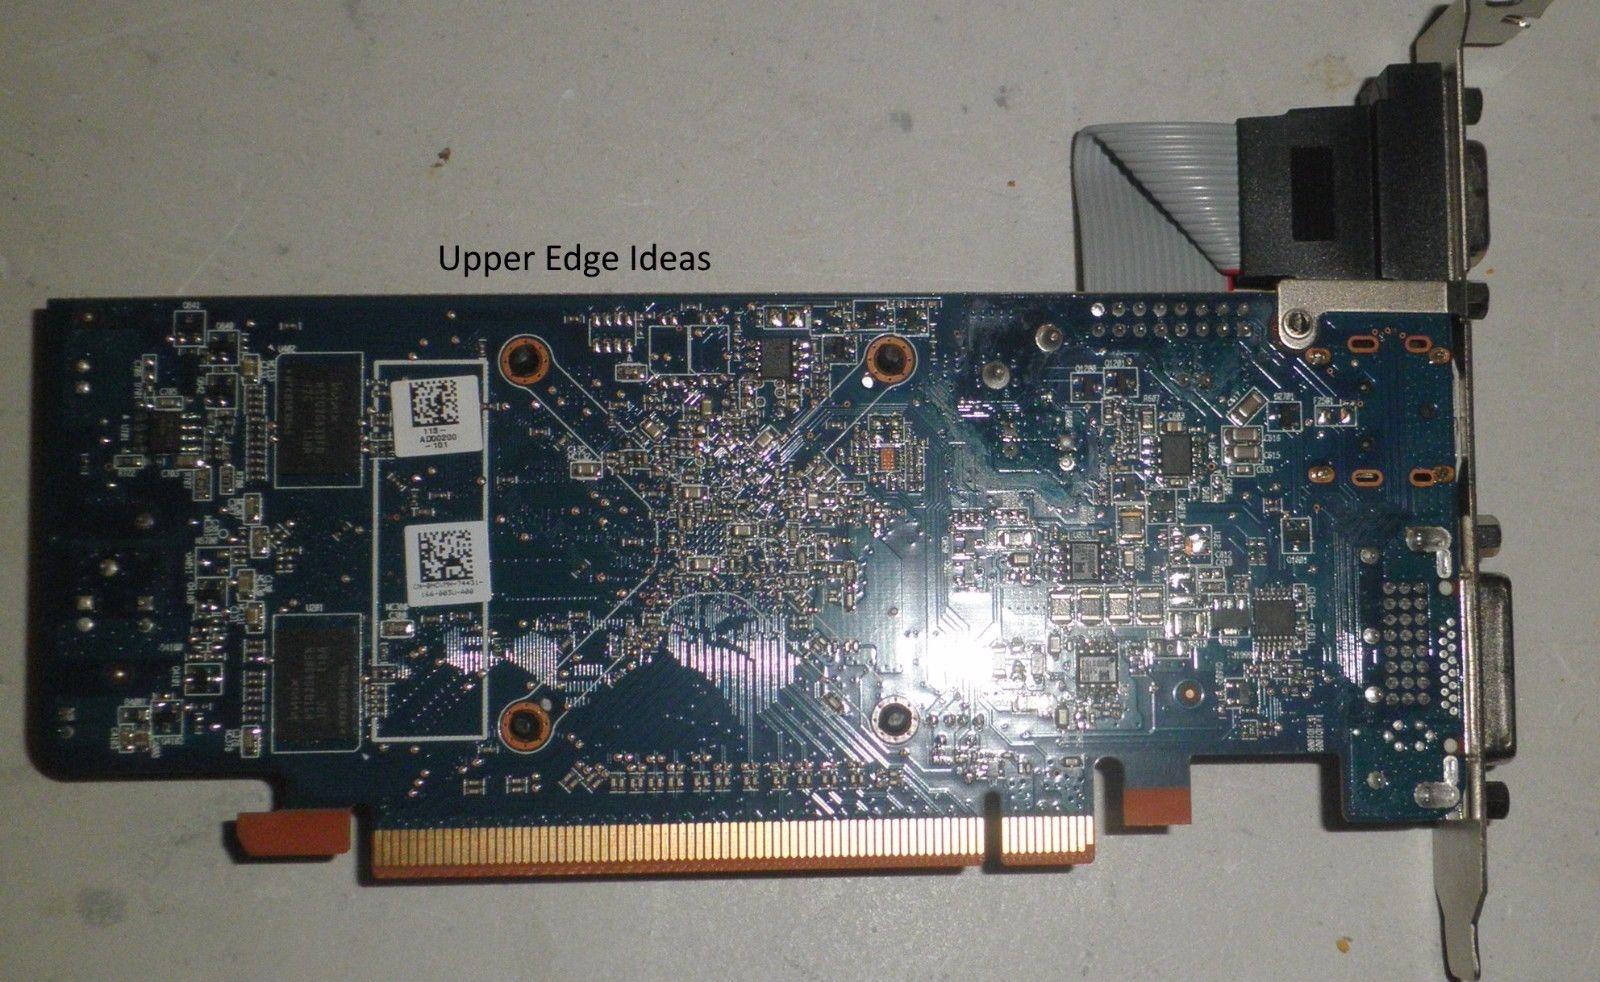 Pegatron HD6450 1GB Graphics Card PCI-e x16 HDMI DVI VGA HCUMH